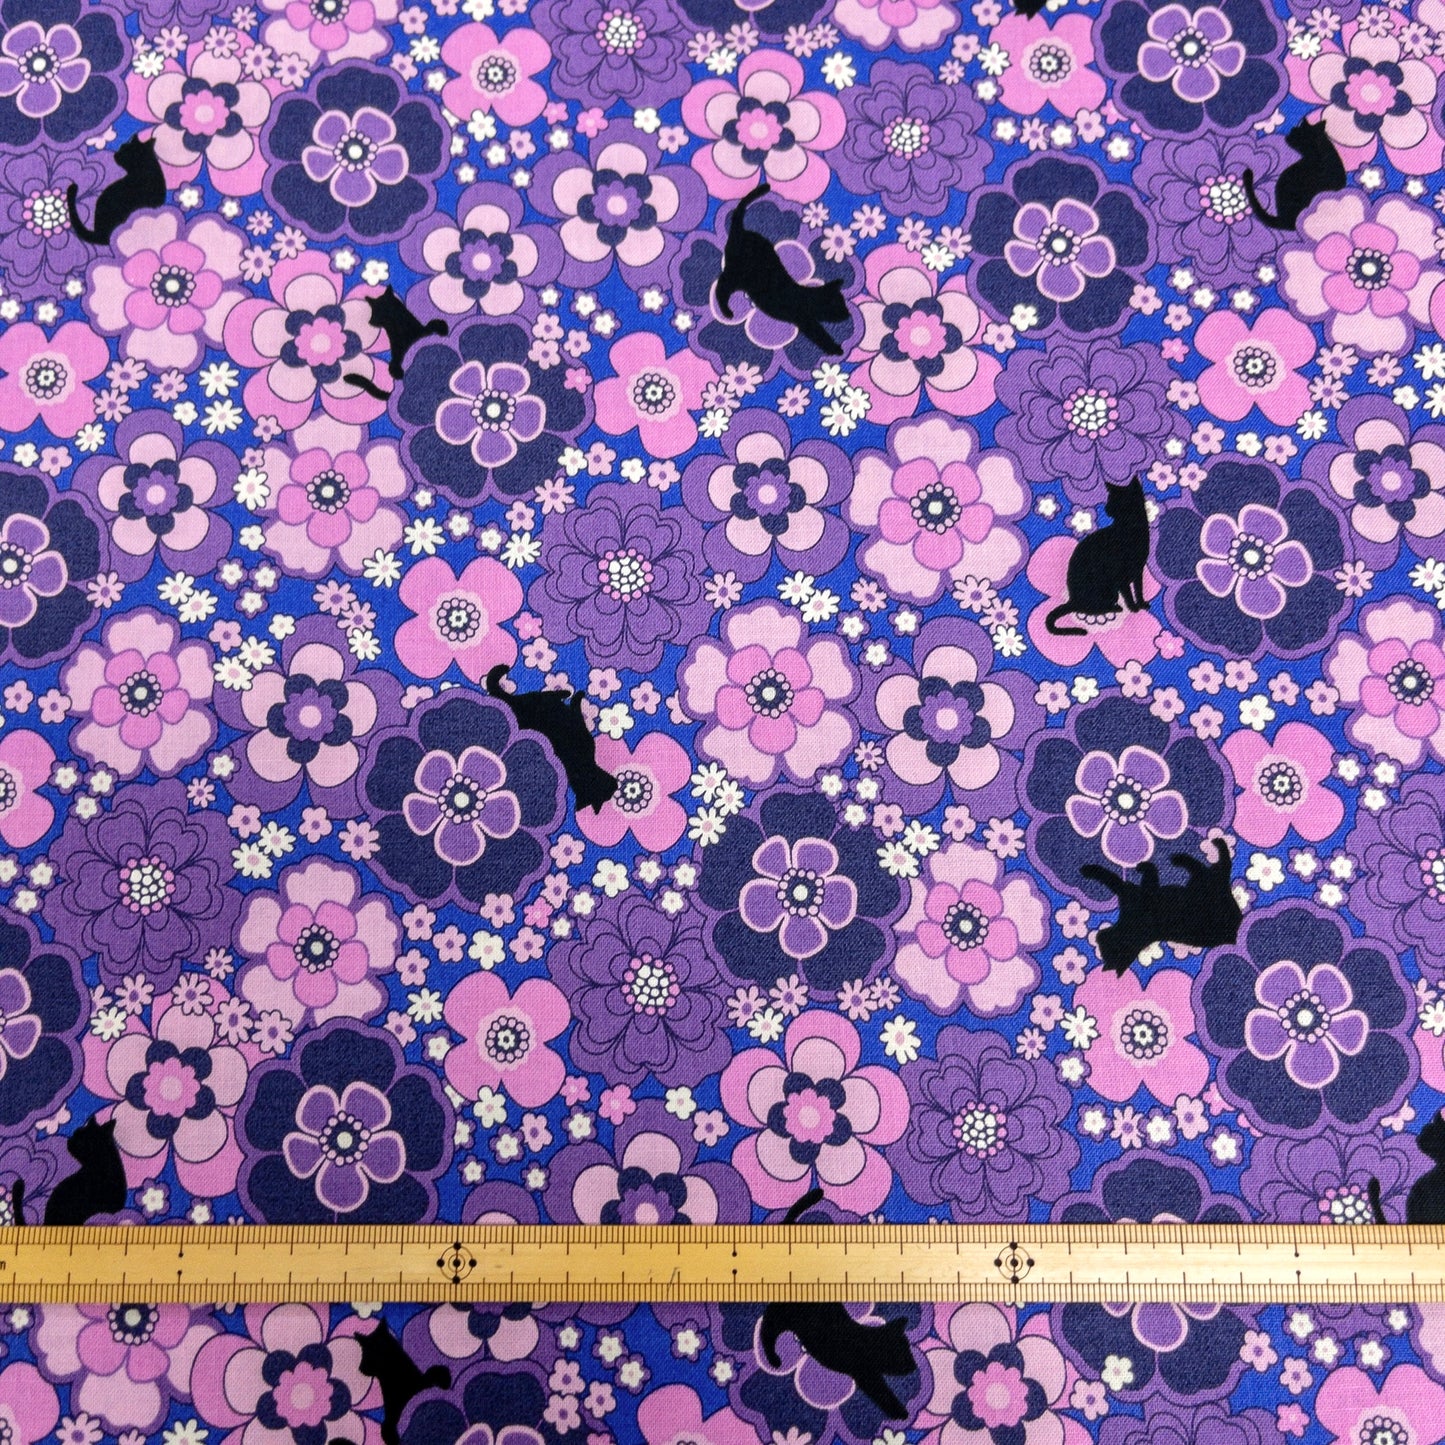 Japan | flowers & black cats 繽紛花朵貓貓 | cotton printed sheeting 純棉